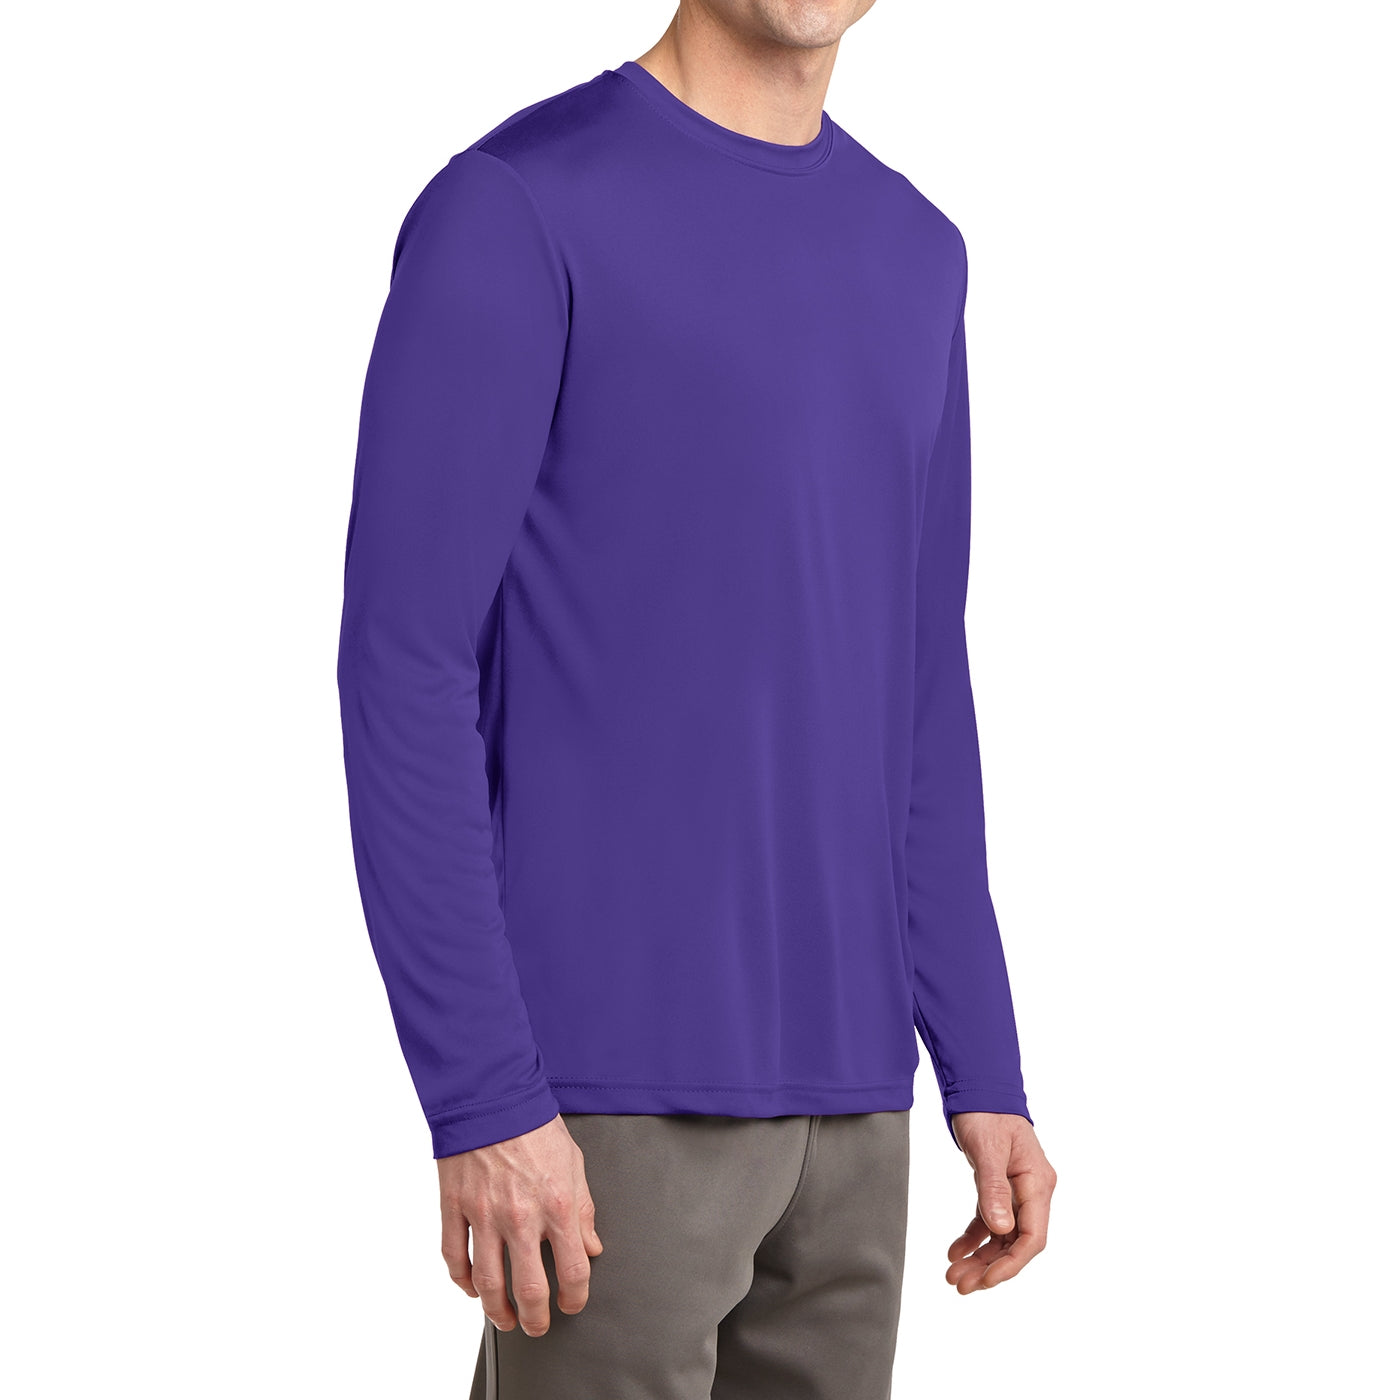 Men's Long Sleeve PosiCharge Competitor Tee - Purple